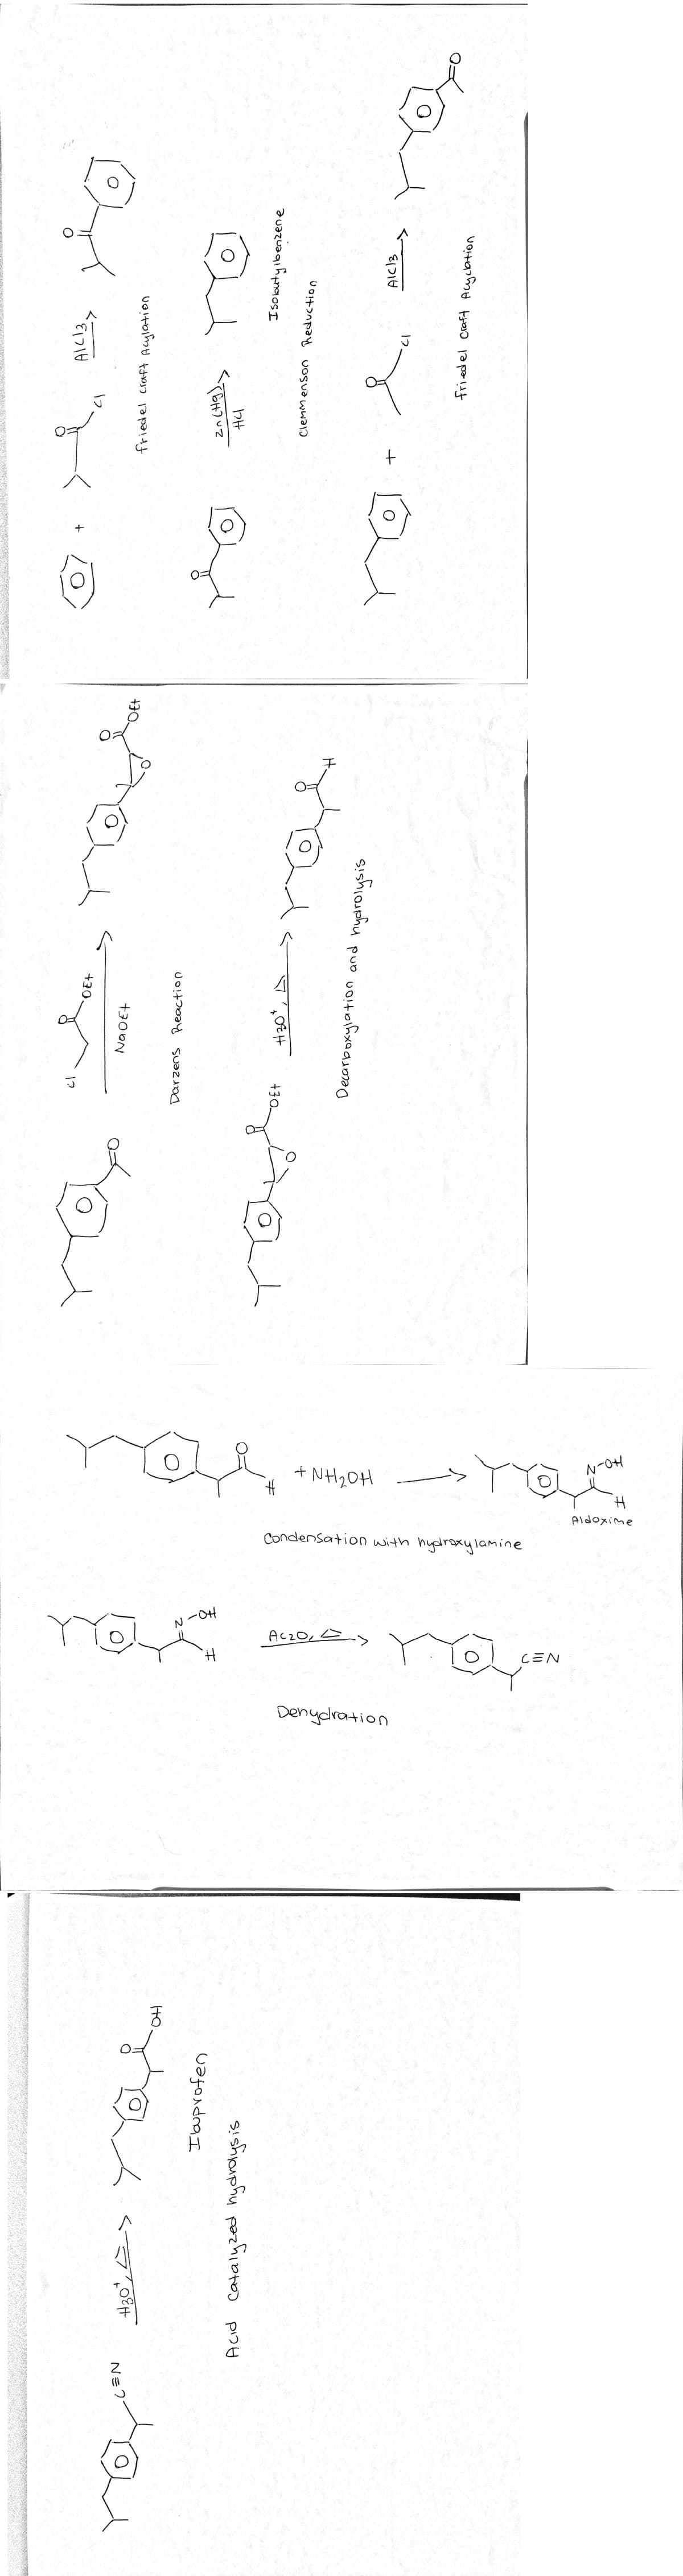 NH20H
N-OH
Aldoxime
Condensation with hydroxylamine
-0H
AczO, E>
CEN
Denydration
friedel craft Acylation
DE+
Isobutyibenzene
duazuaqıh
Na OEt
clemmenson Reductio.
H.
+30.
2 =
HO
NE?
H30°
I buprofen
Acid Catalyzed hydrdysis
